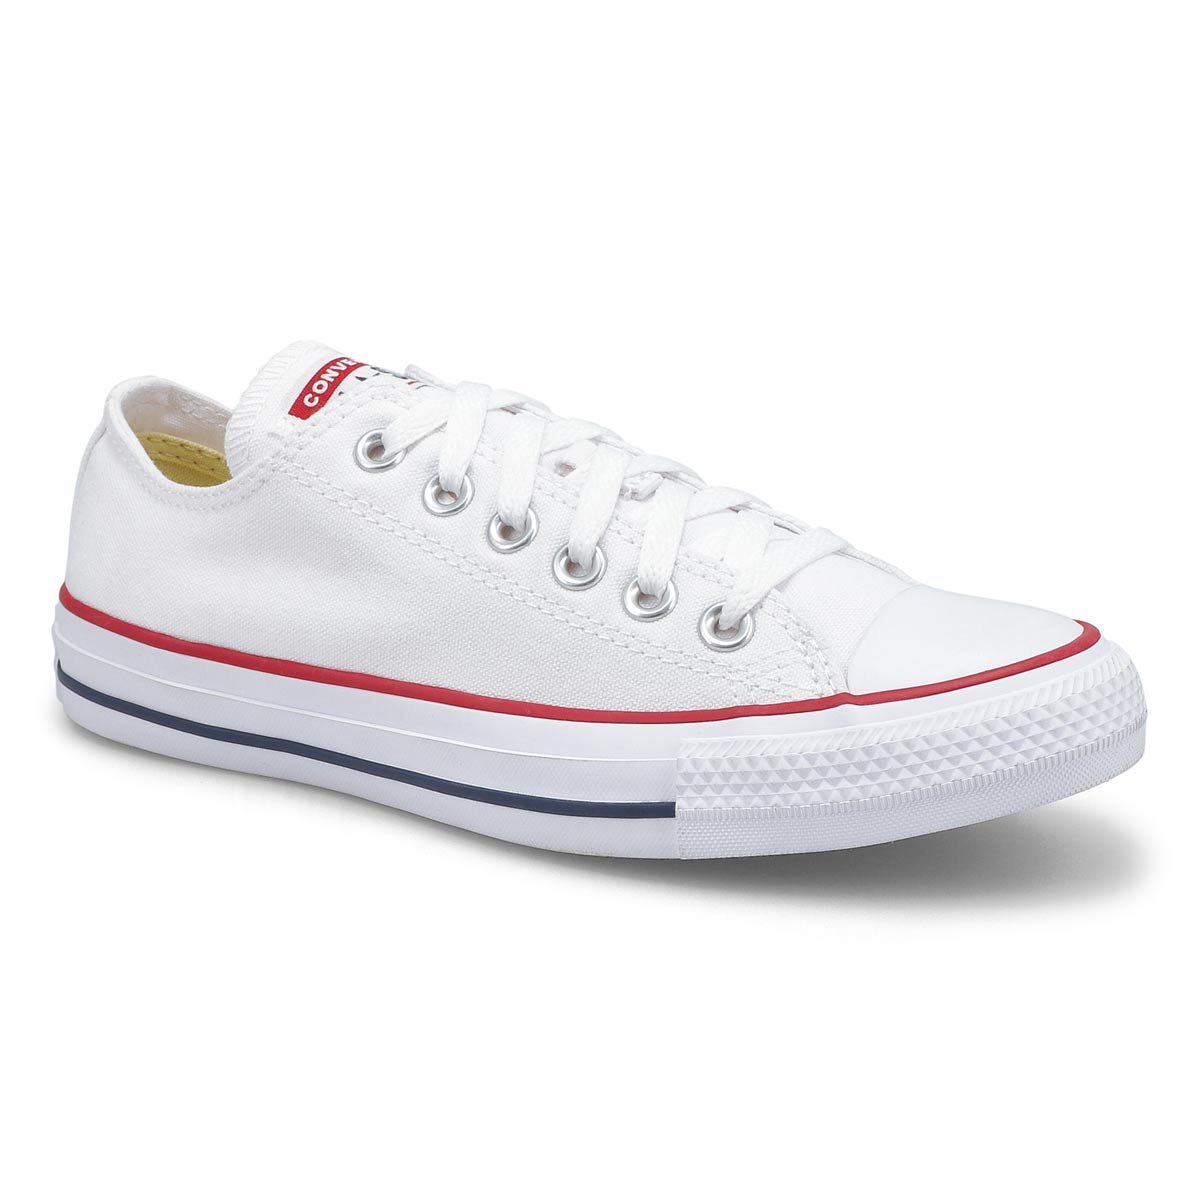 white converse tennis shoes